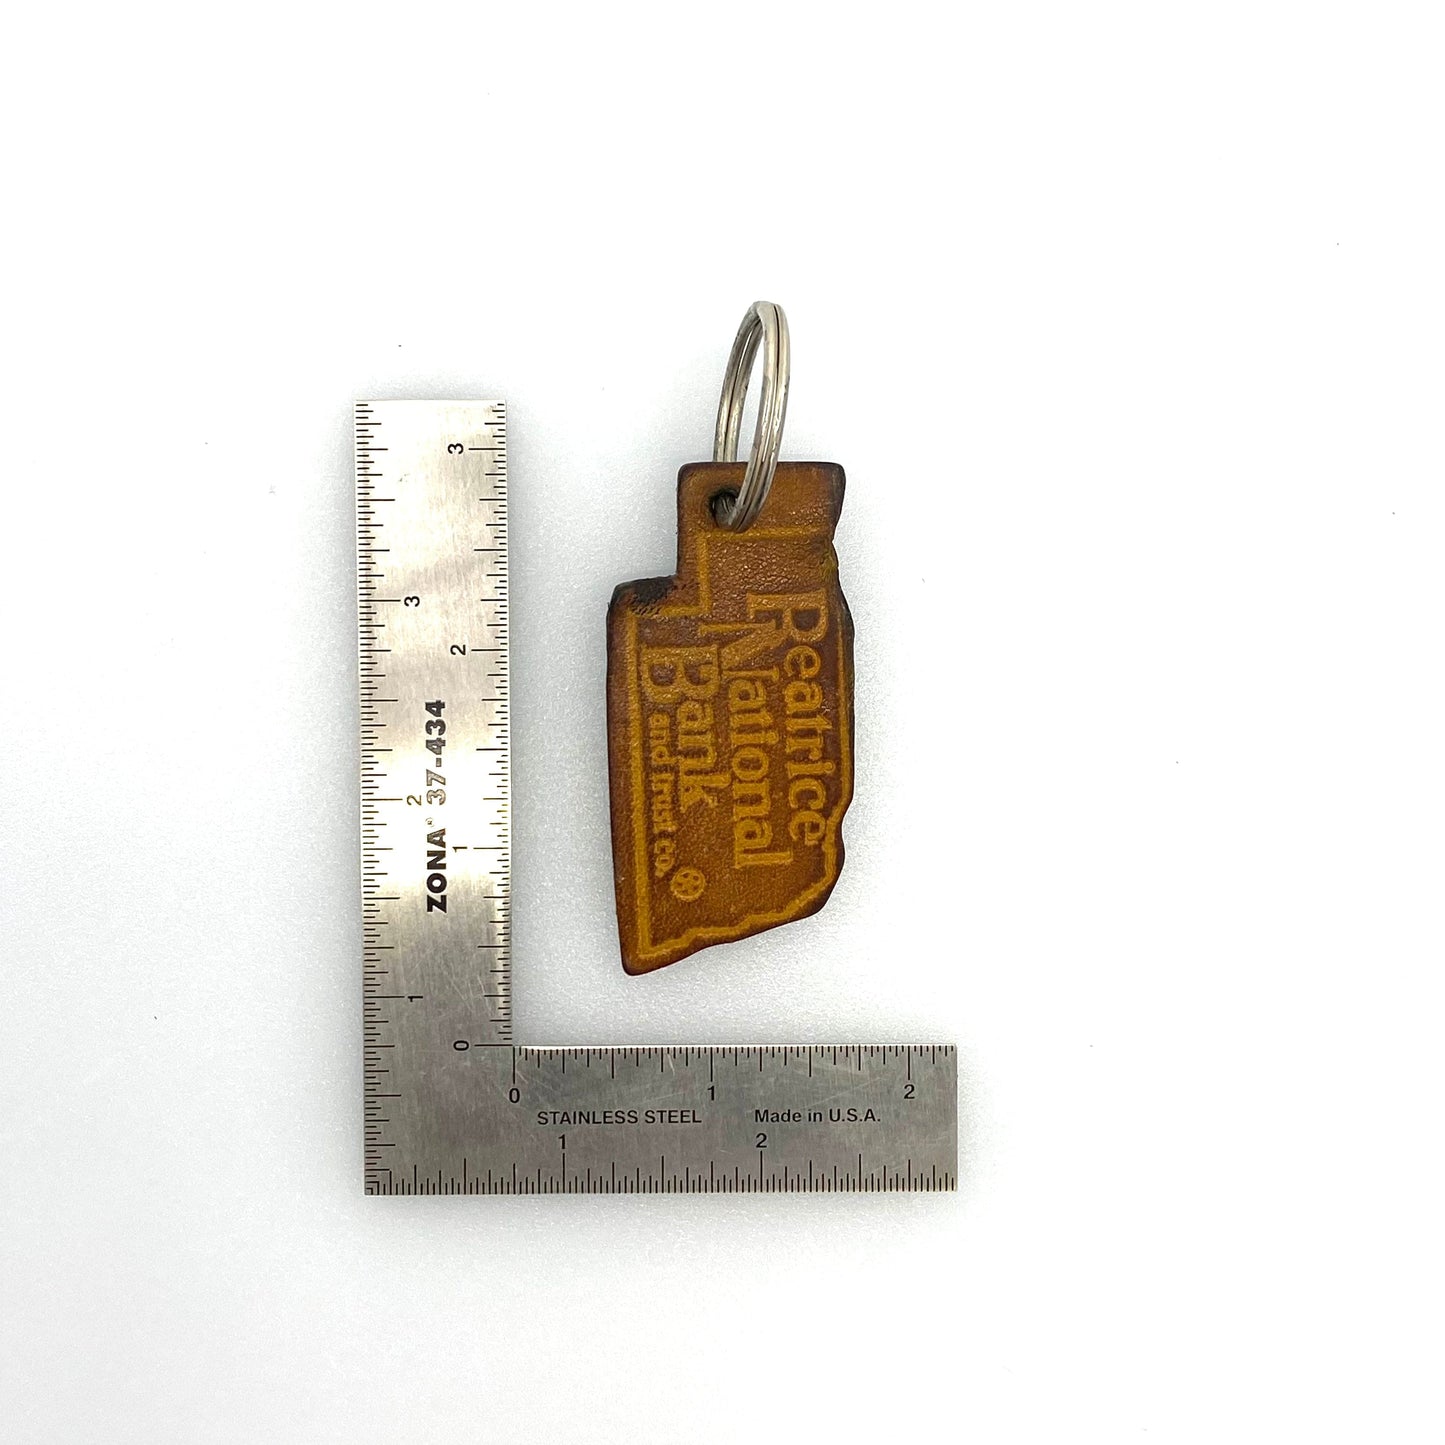 Vintage Beatrice National Bank Leather Nebraska Keychain Key Ring Tag